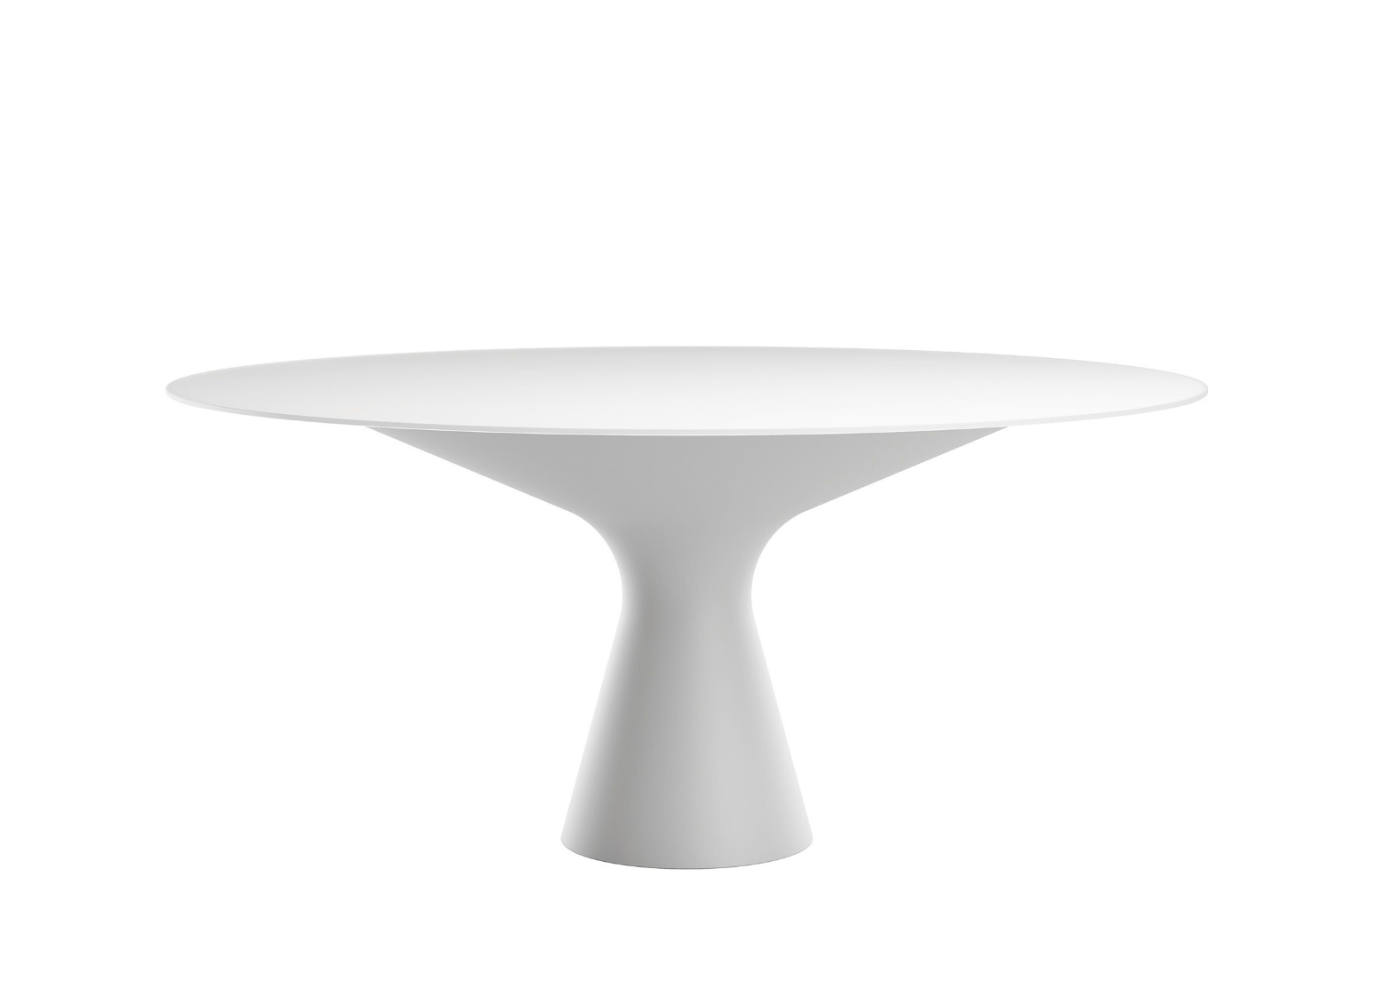 Blanco Table by Zanotta